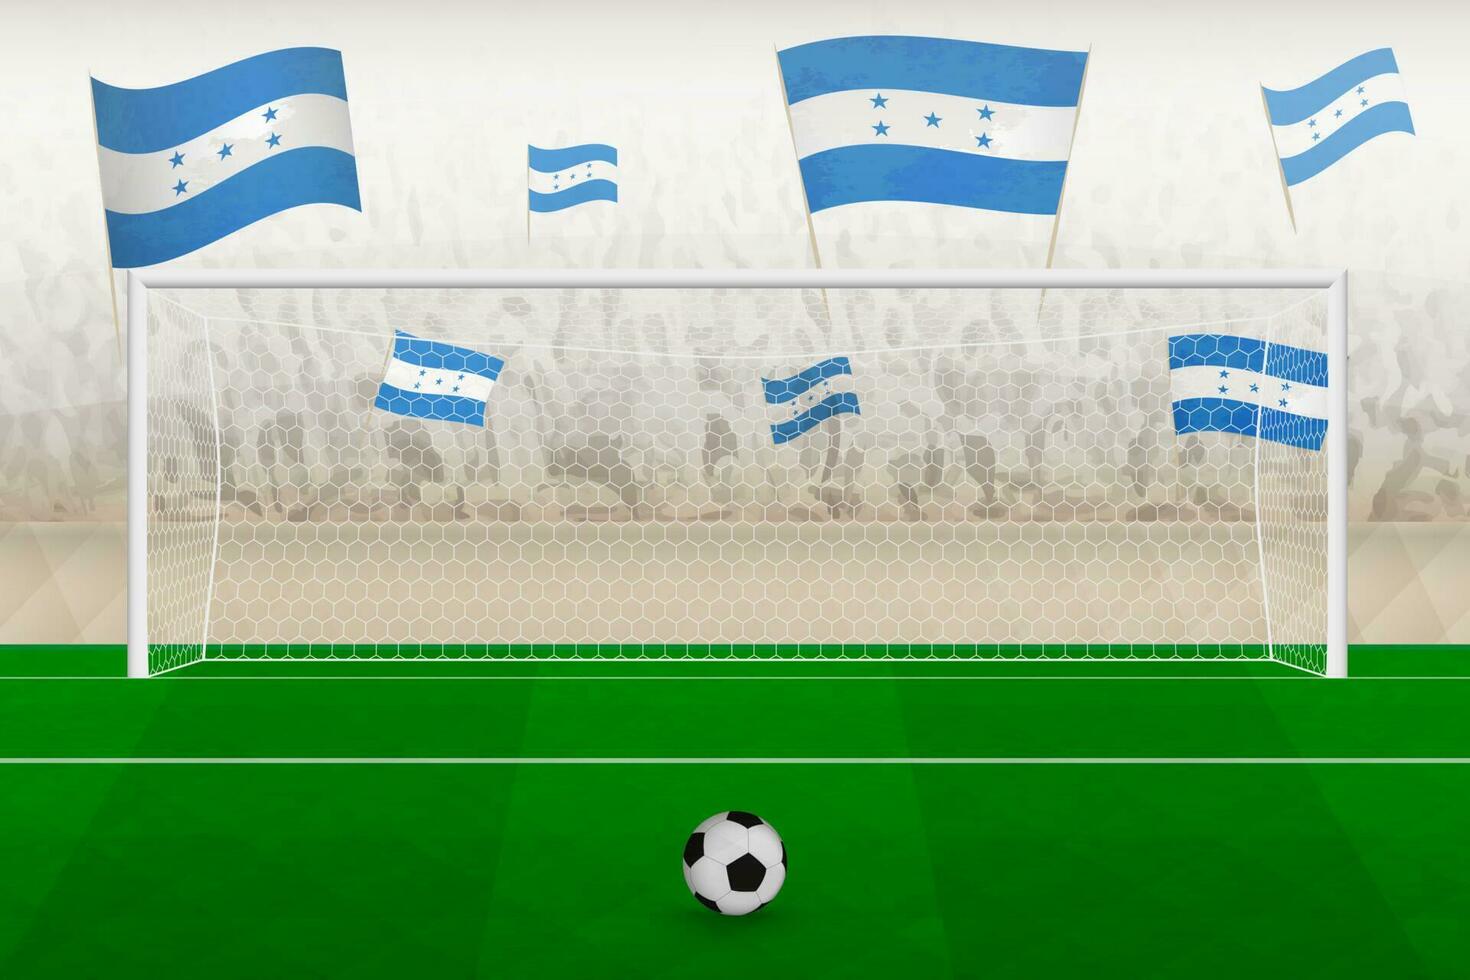 Honduras football team fans with flags of Honduras cheering on stadium, penalty kick concept in a soccer match. vector